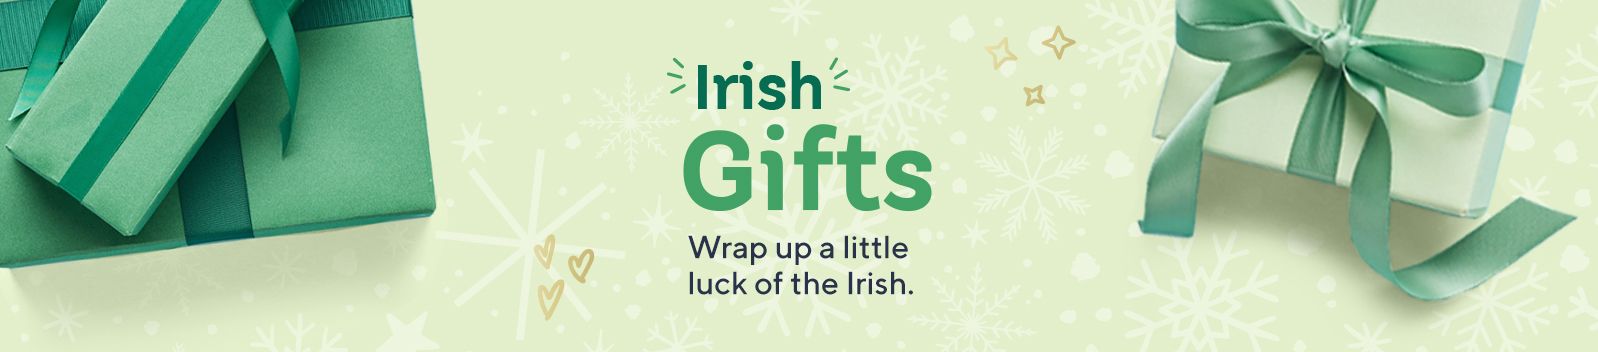 Irish Gifts. Wrap up a little luck of the Irish. 